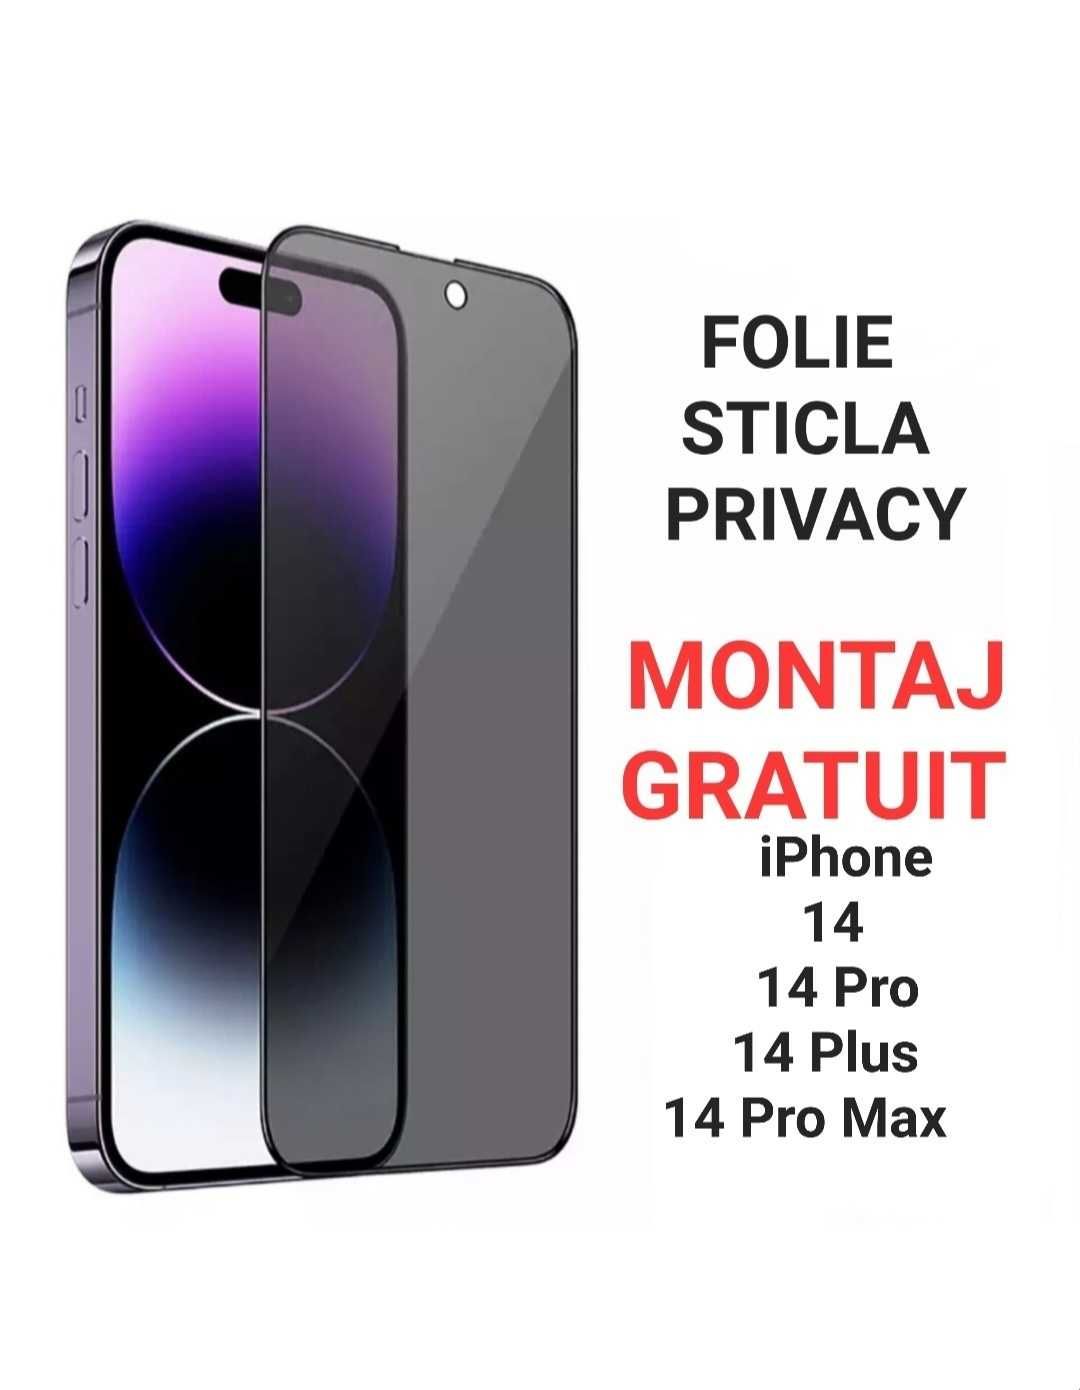 Folie Sticla Privacy iPhone 11 / Pro / Max / Plus Full Glass